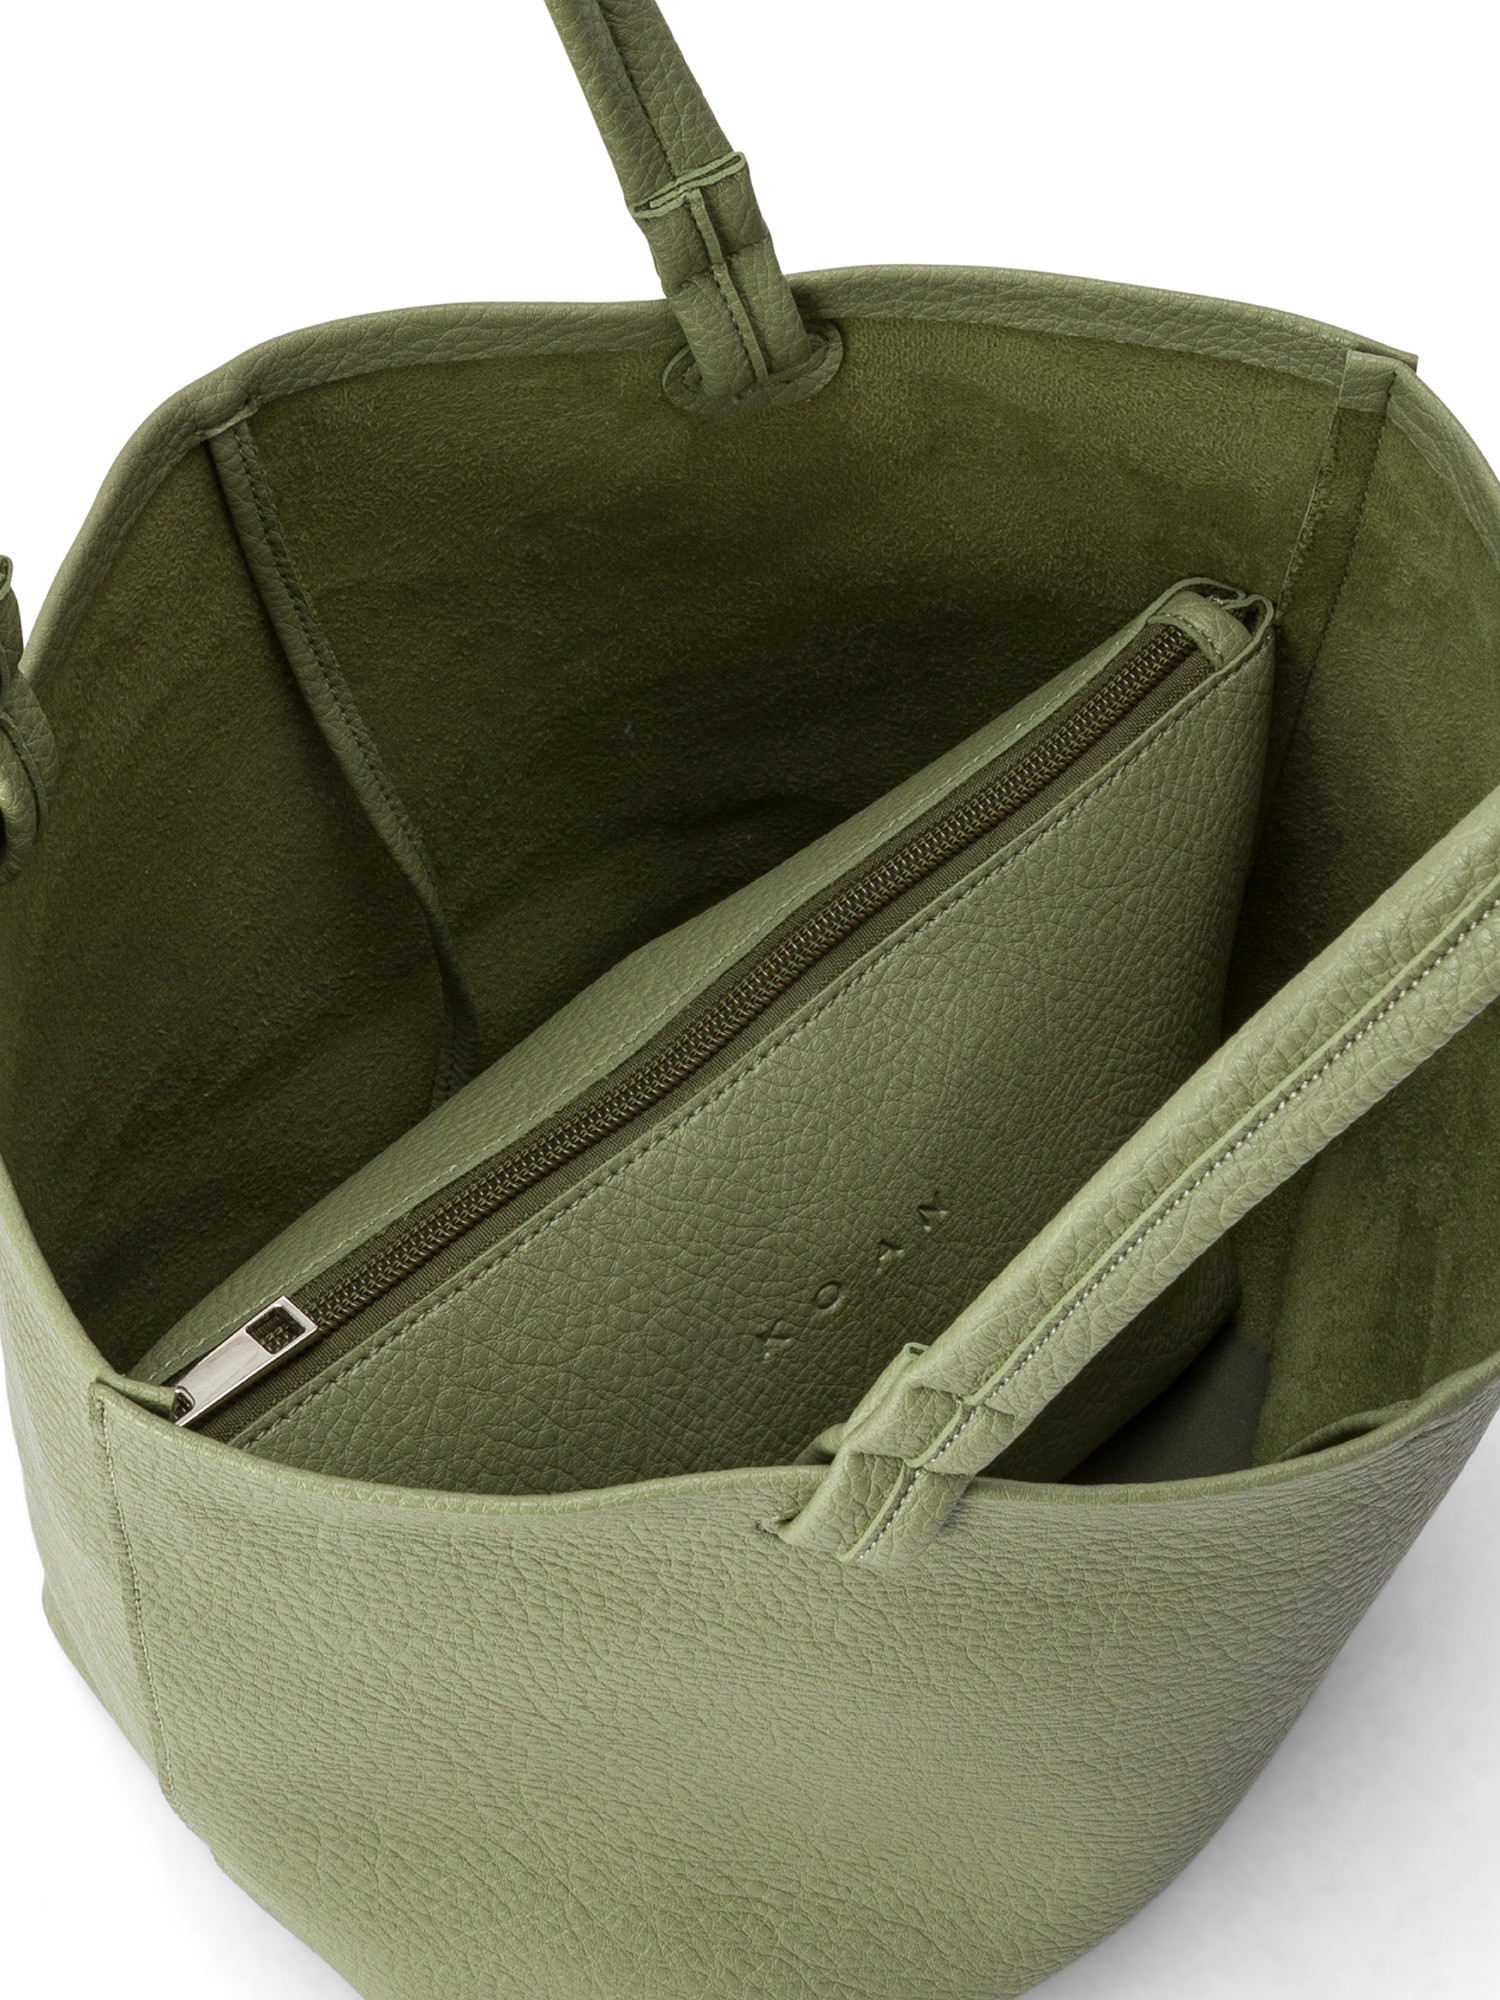 Koan - Shopping bag, Verde, large image number 2